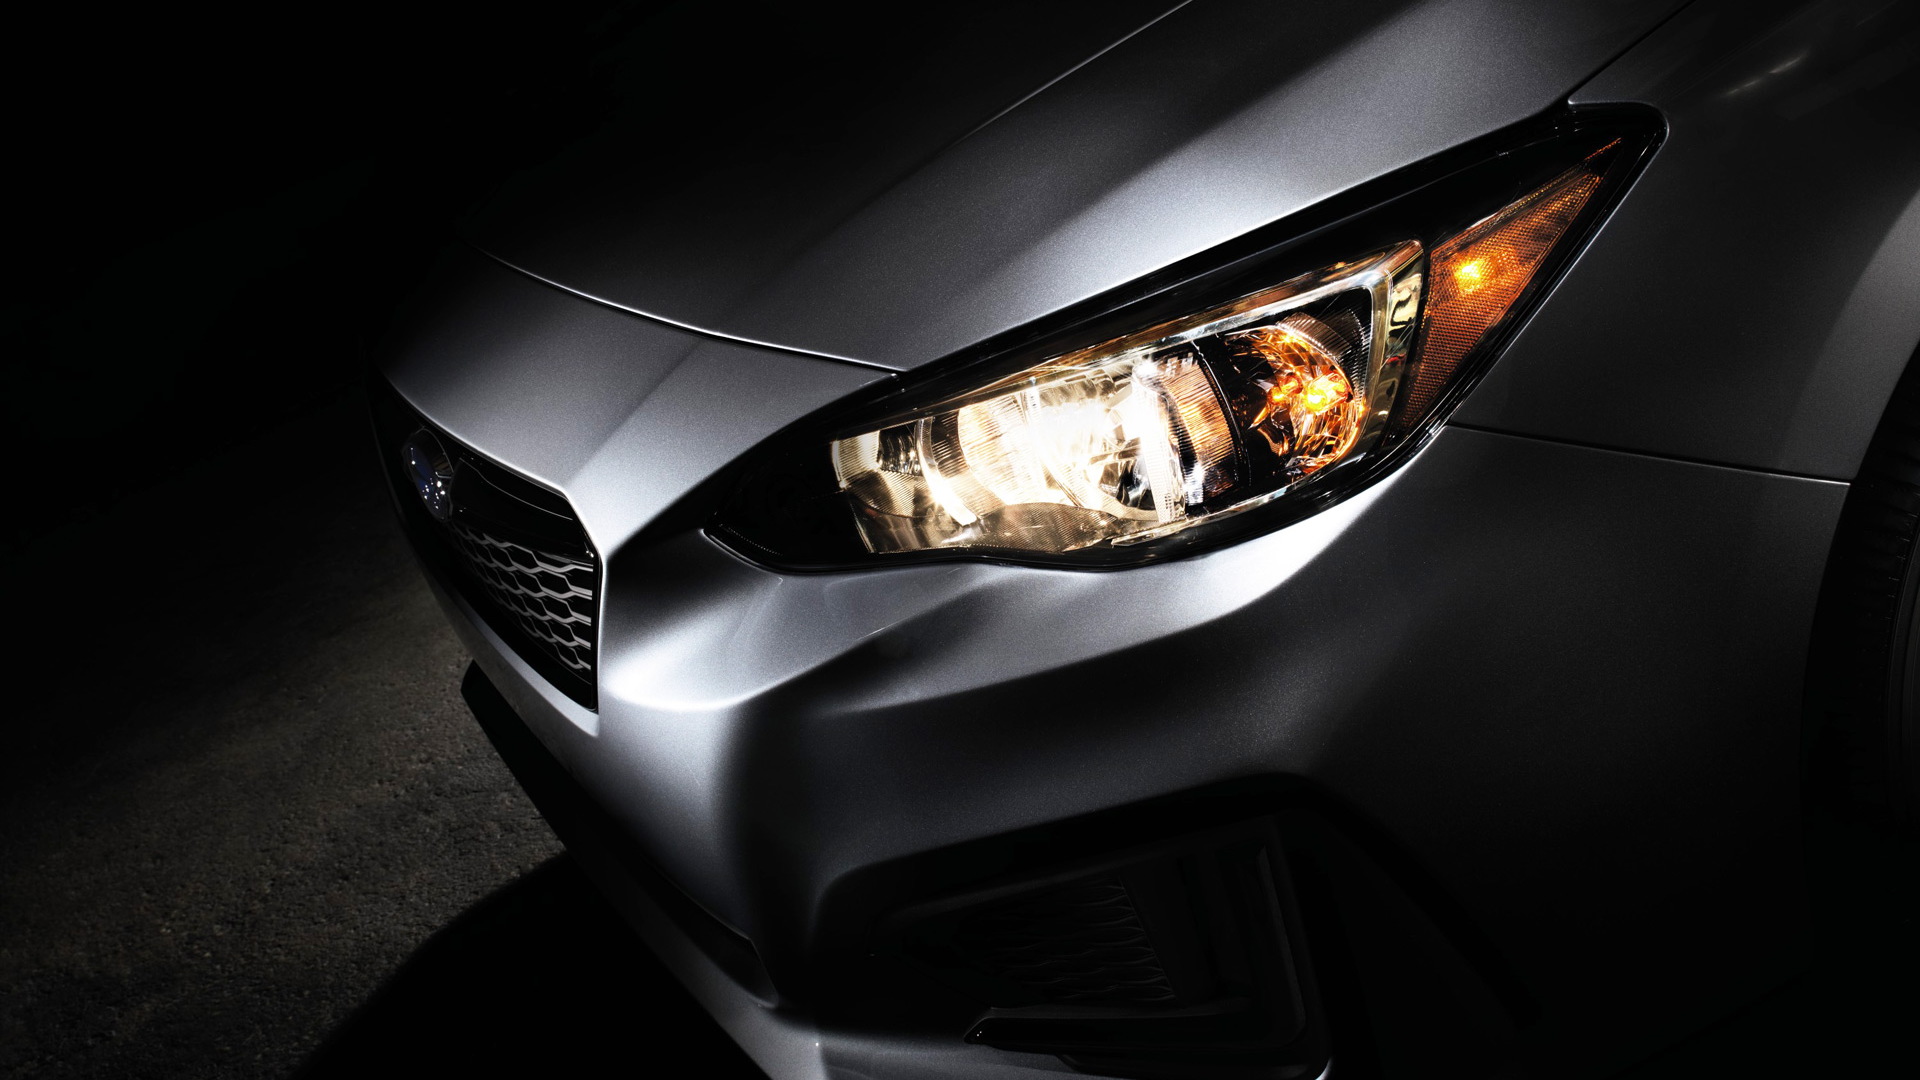 Teaser for 2017 Subaru Impreza debuting at 2016 New York Auto Show